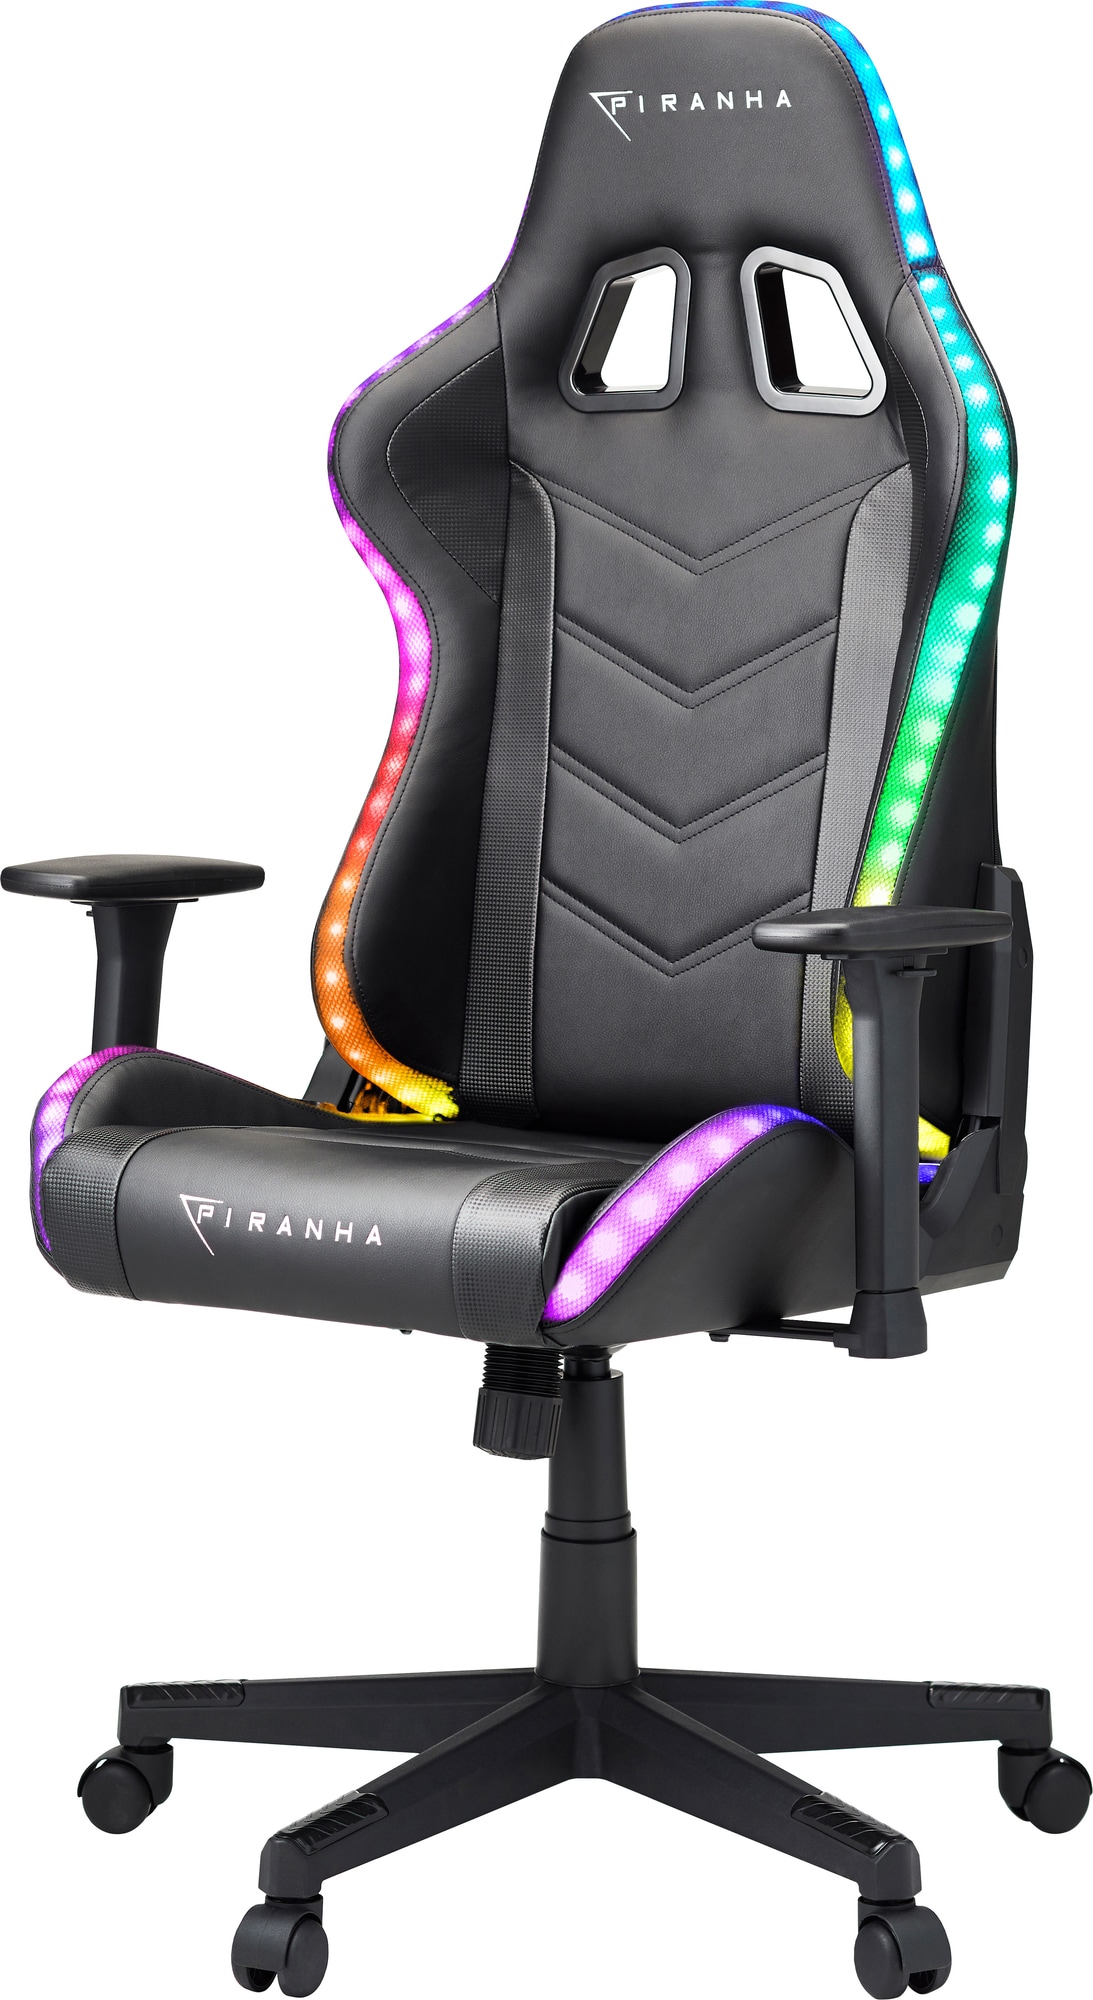 Piranha Attack V2 RGB gaming stol | Elgiganten